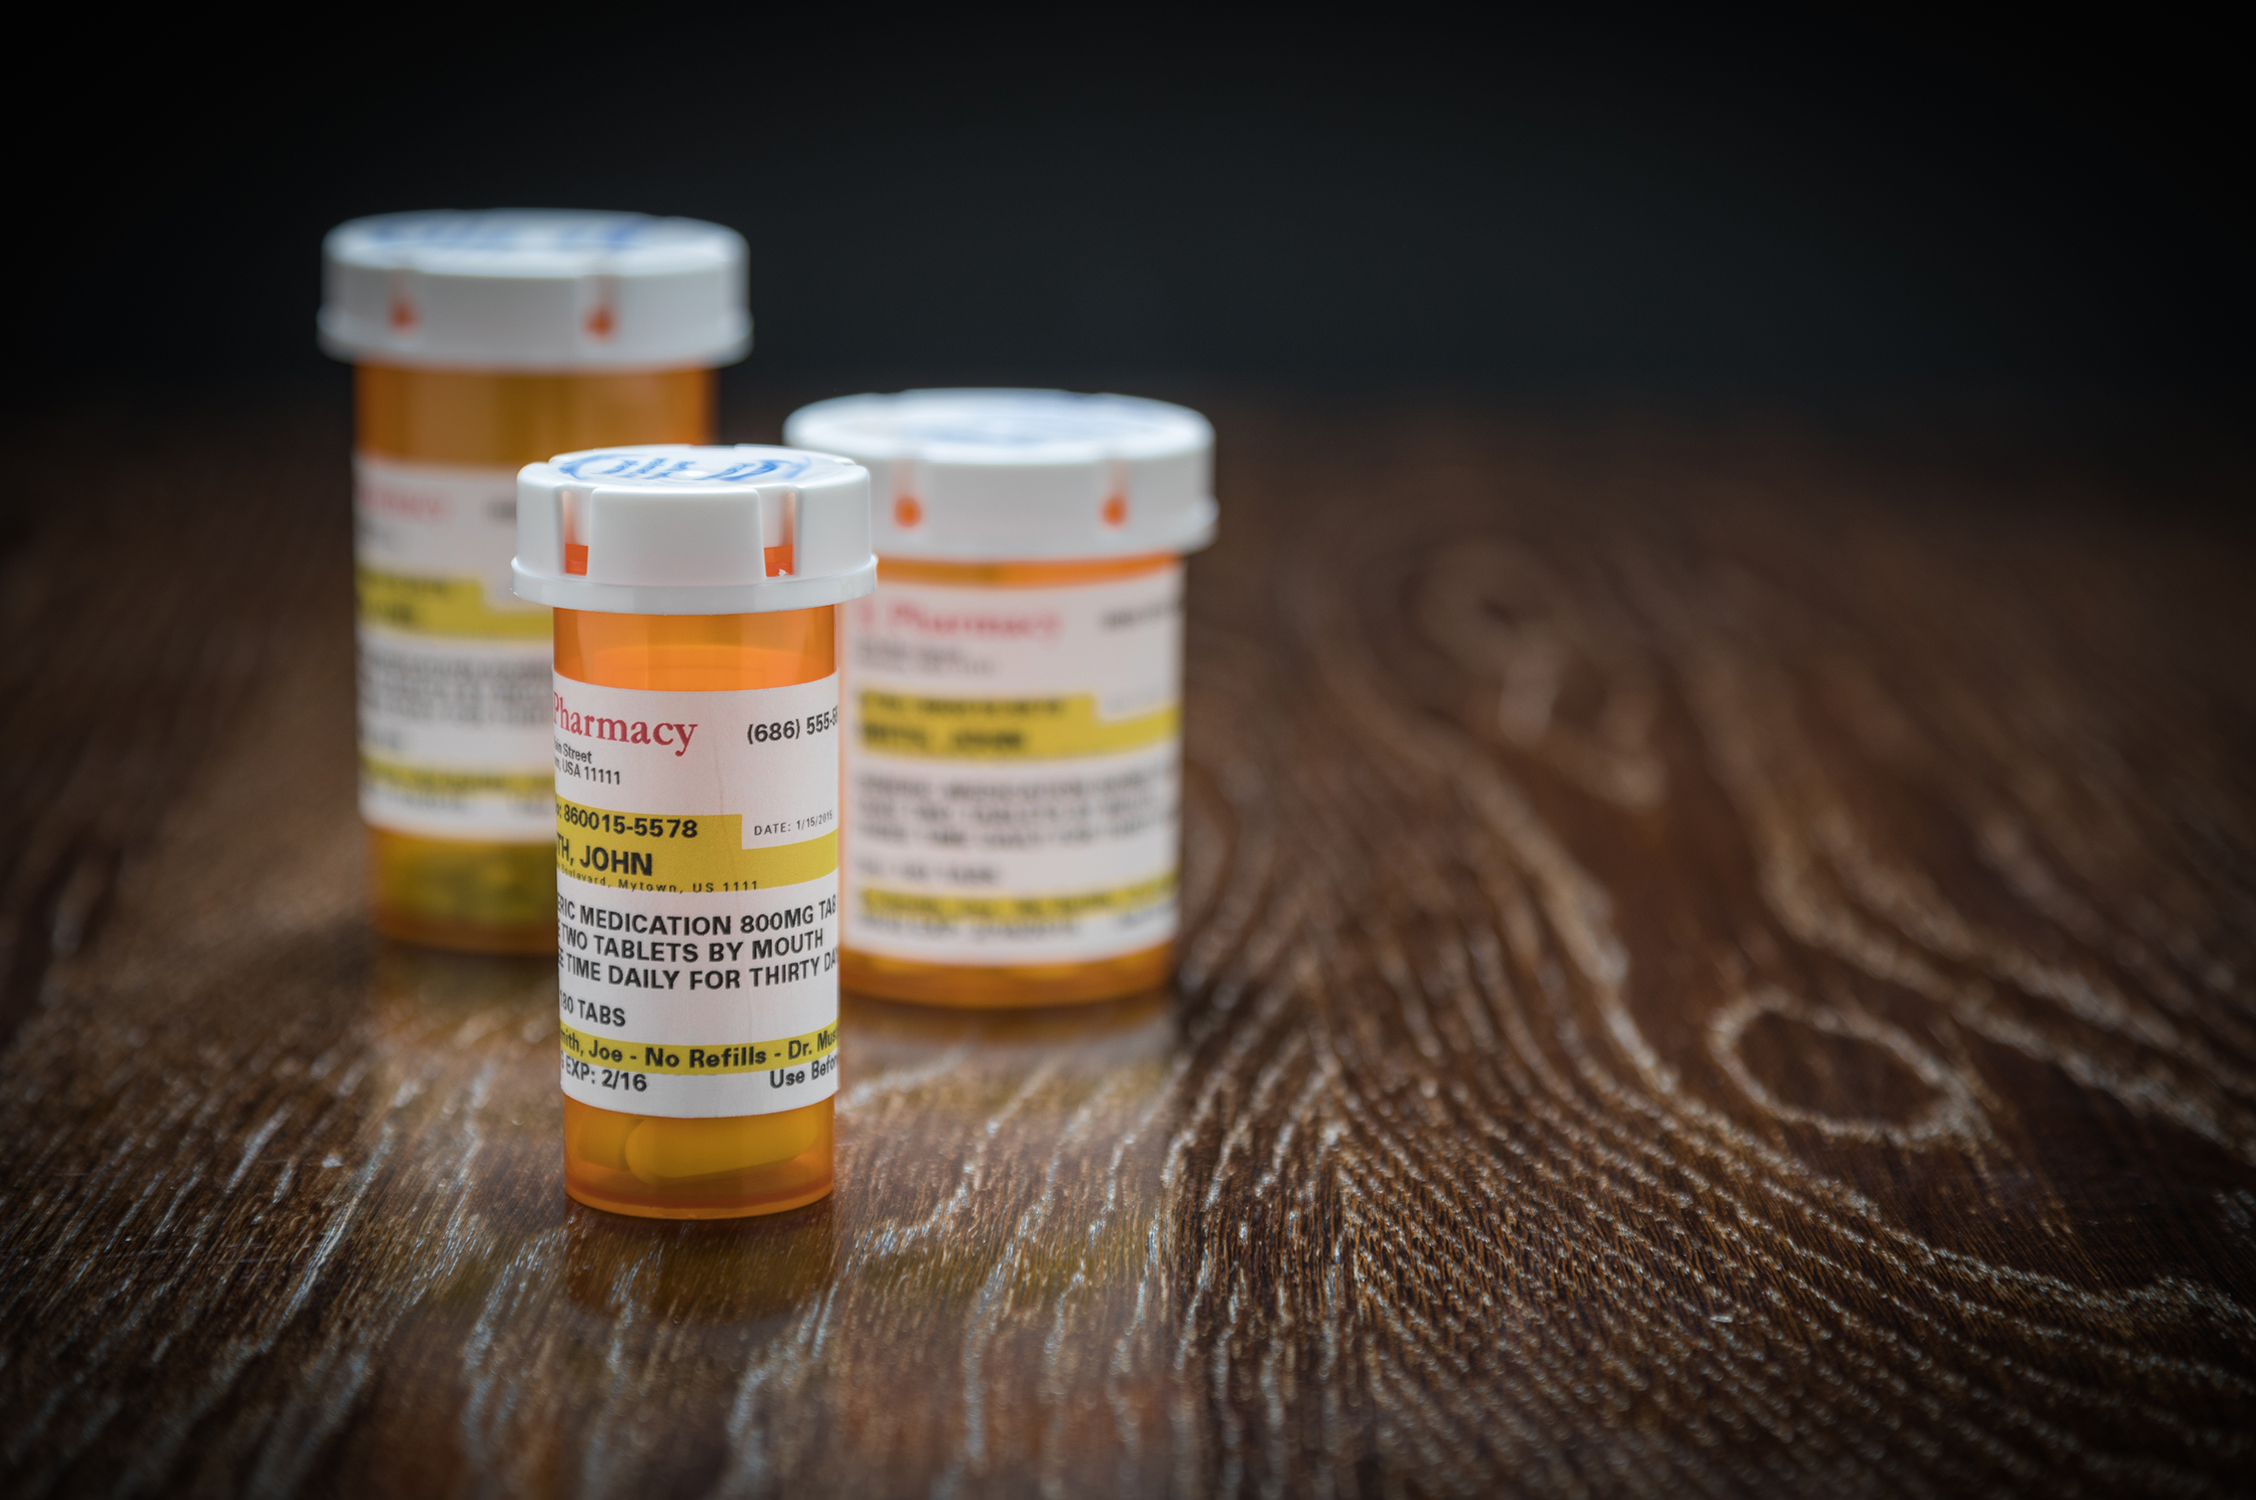 Extra Help with Medicare Part D Prescription Drug Coverage